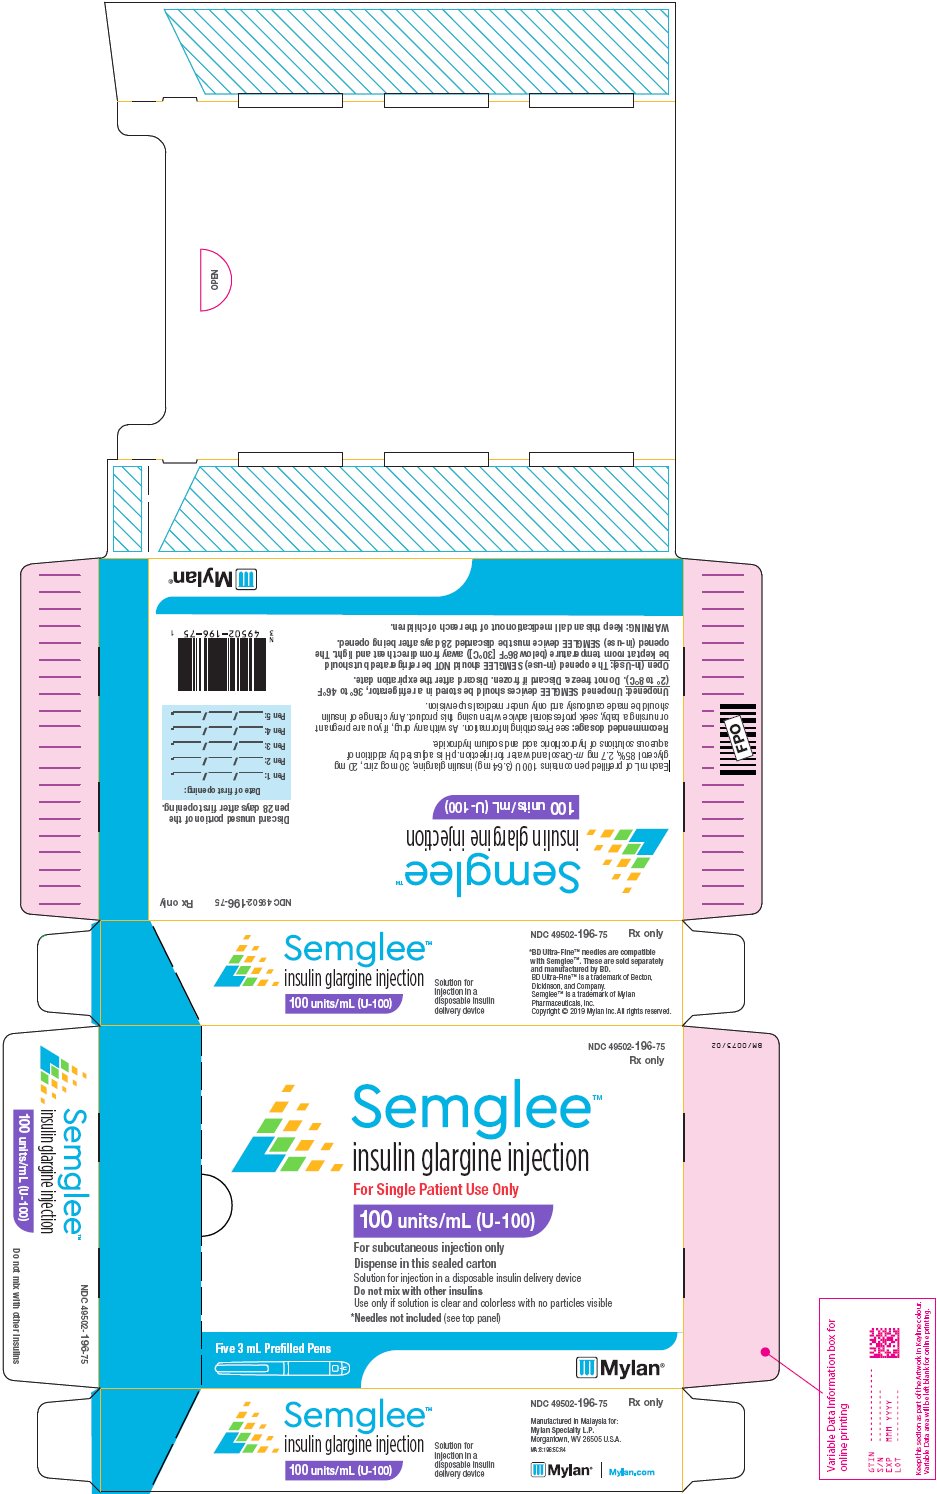 Semglee (insulin glargine injection) Pen 100 units/mL Carton Label